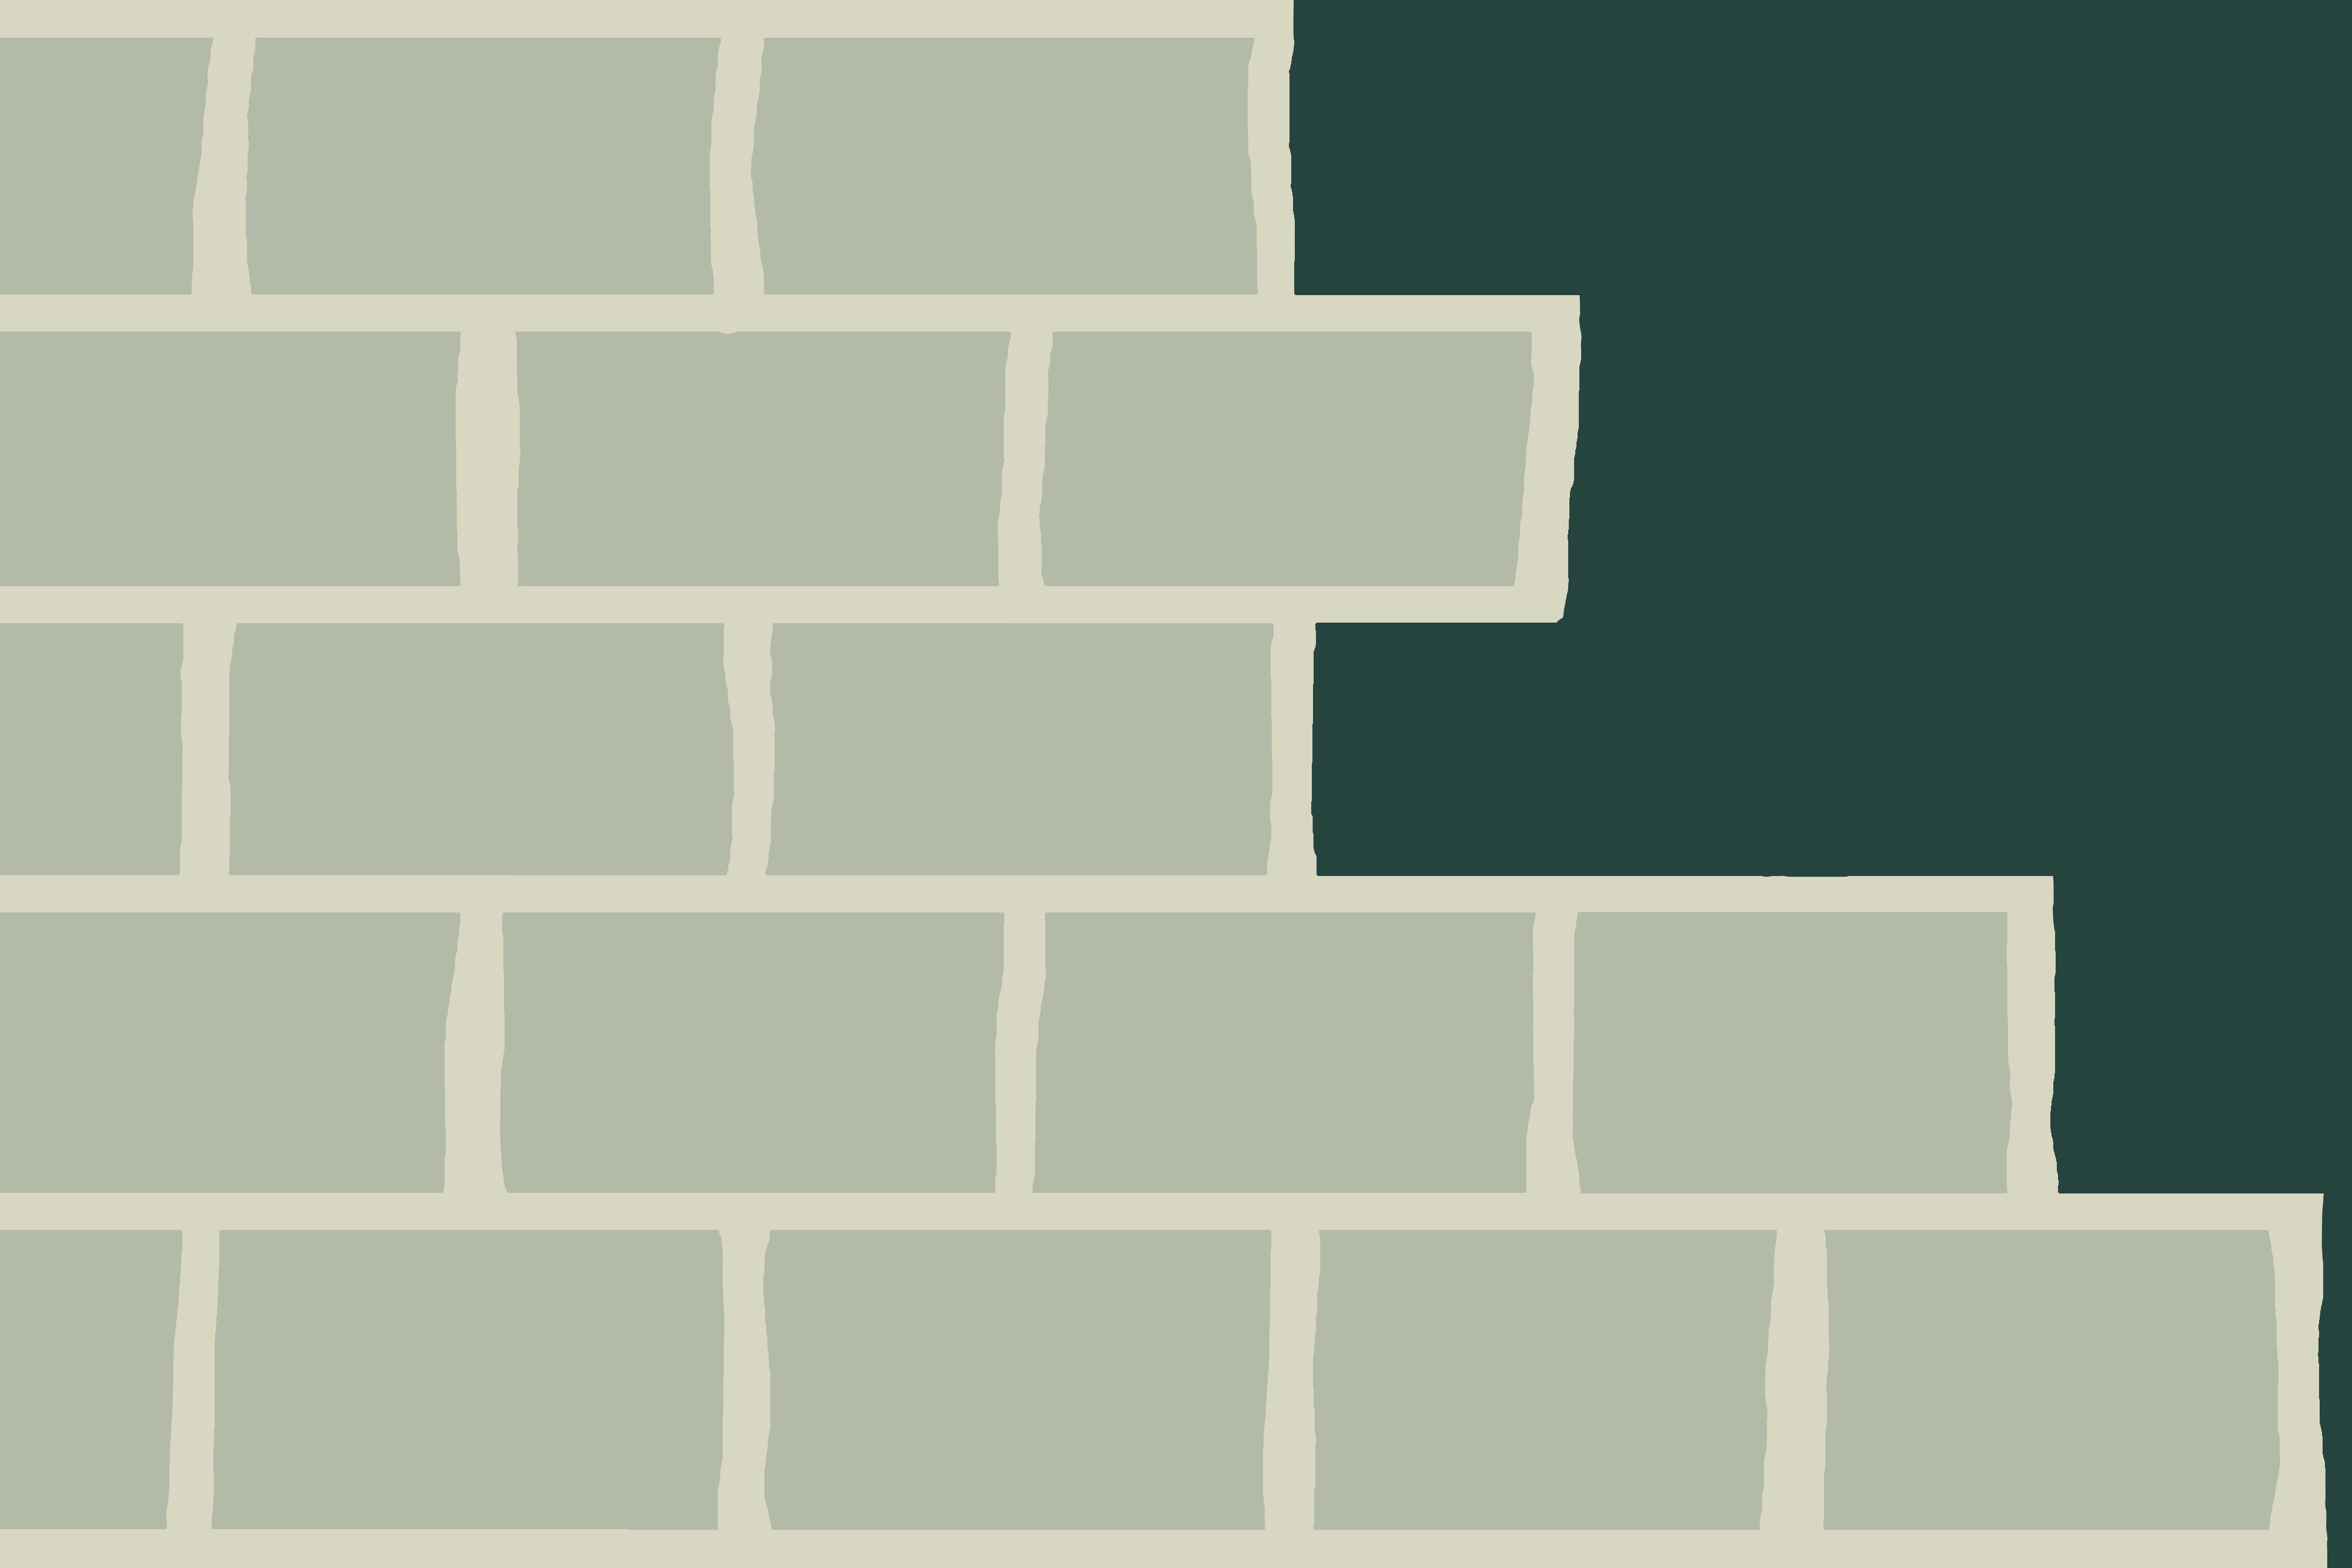 abstract drawing of a deteriorating brick wall